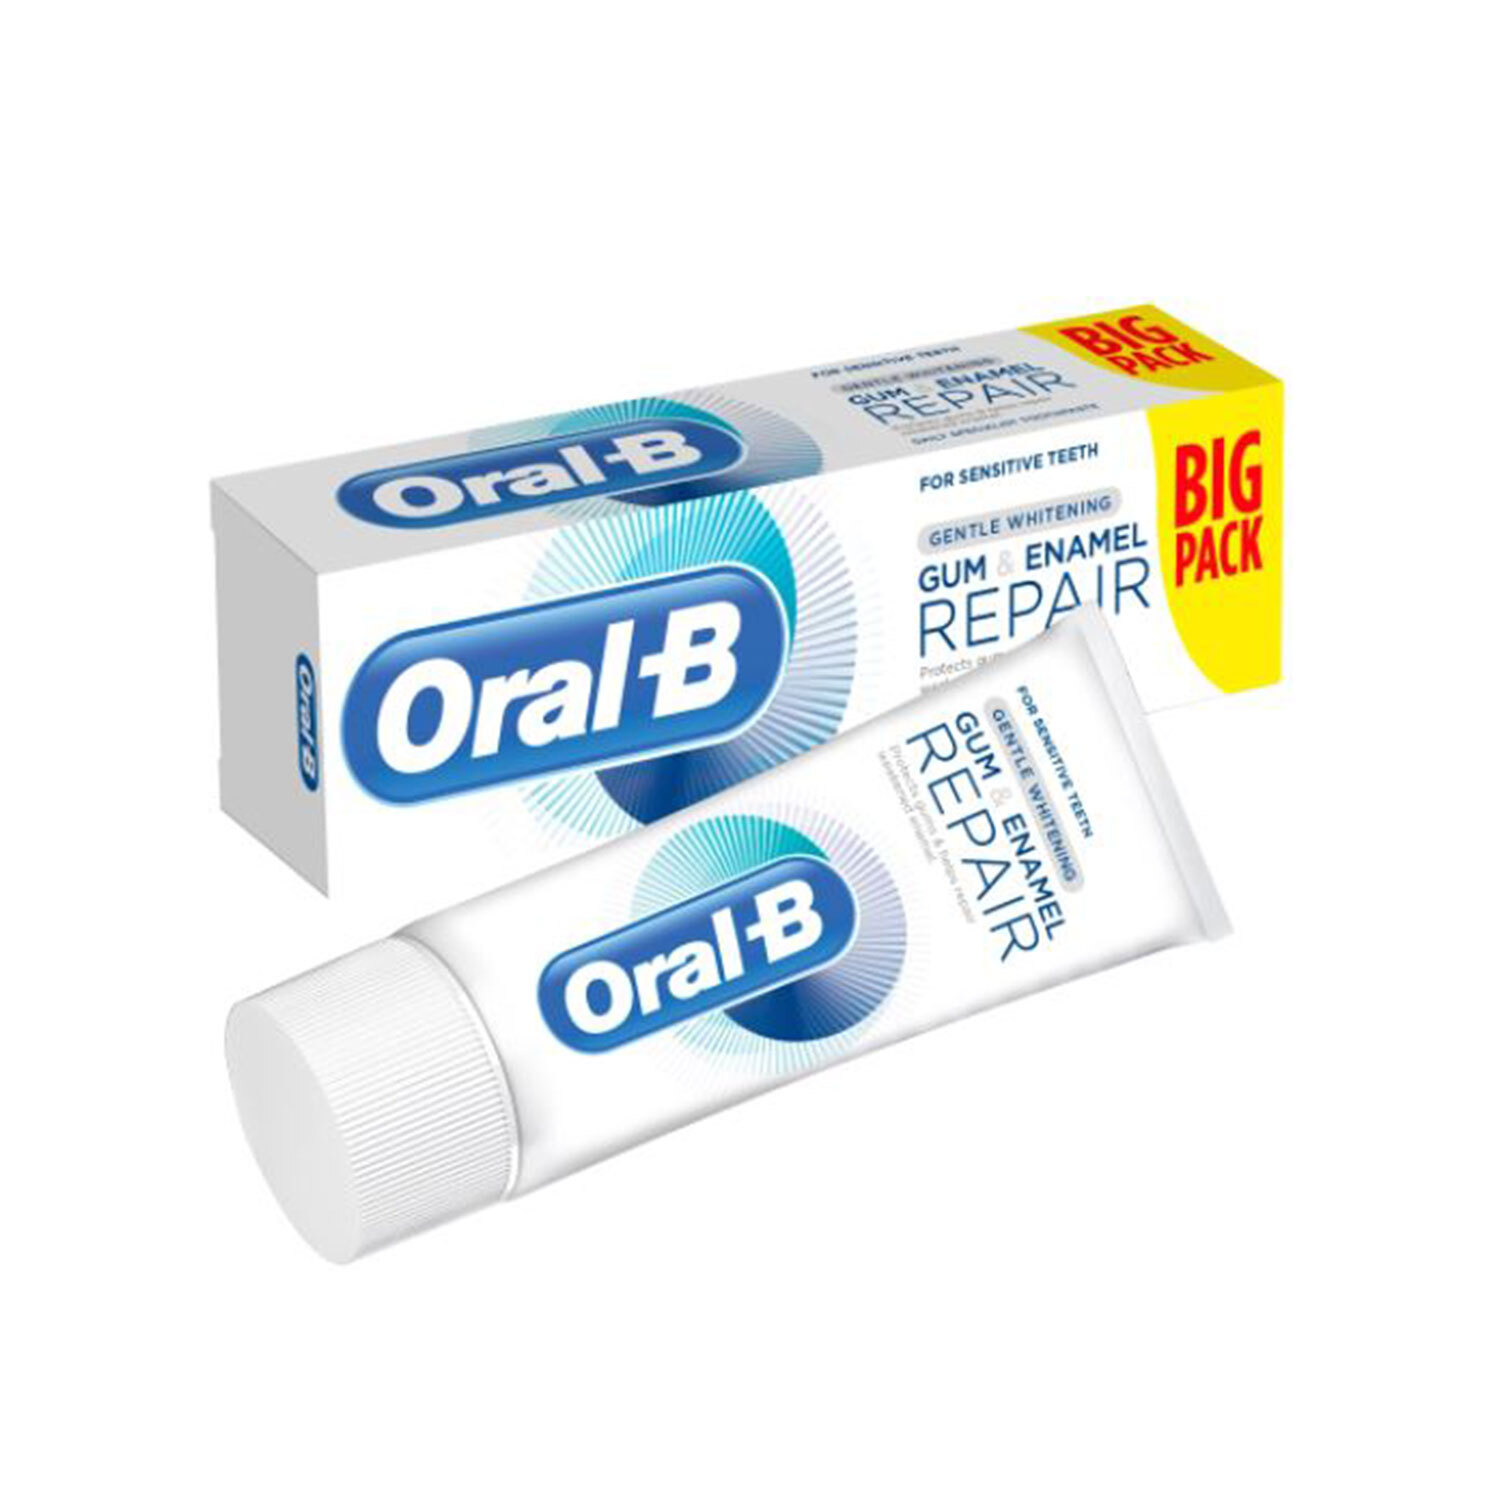 Oral-B Gum and Enamel Repair Gentle Whitening Toothpaste Image 1